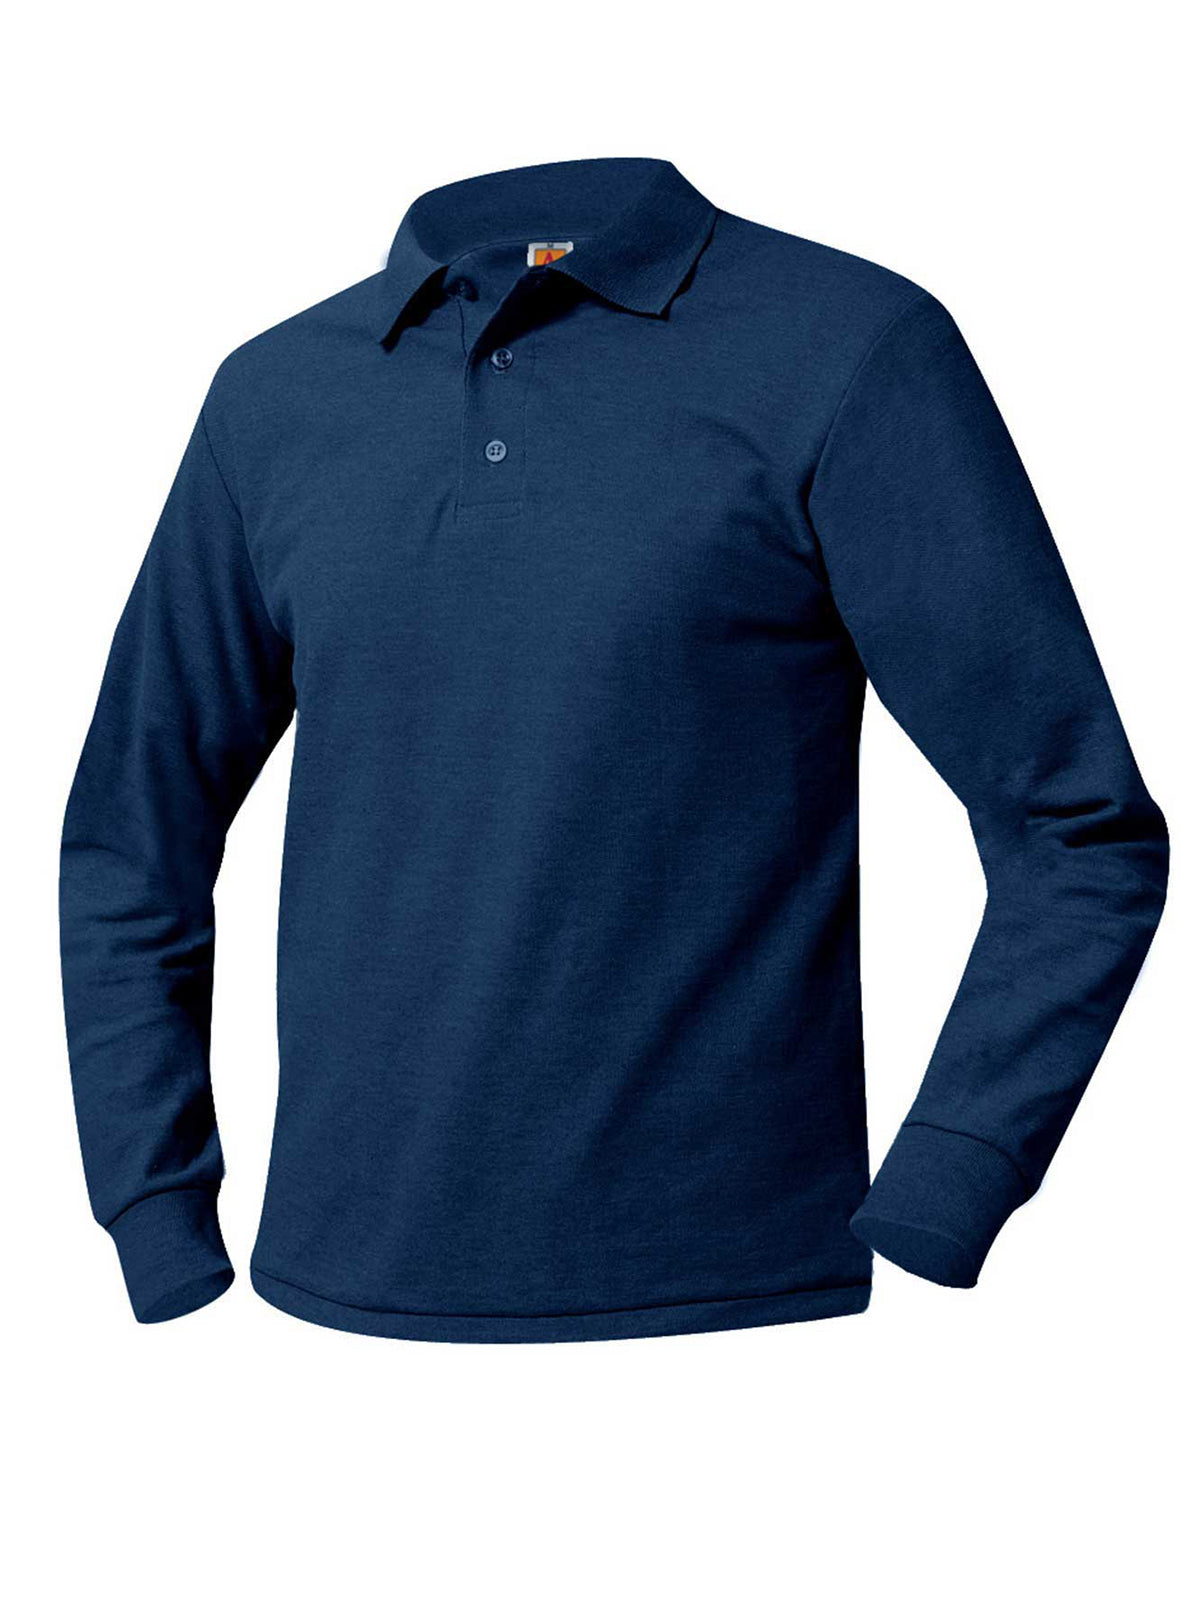 Unisex Long Sleeve Knit Shirt - 8766 - Navy